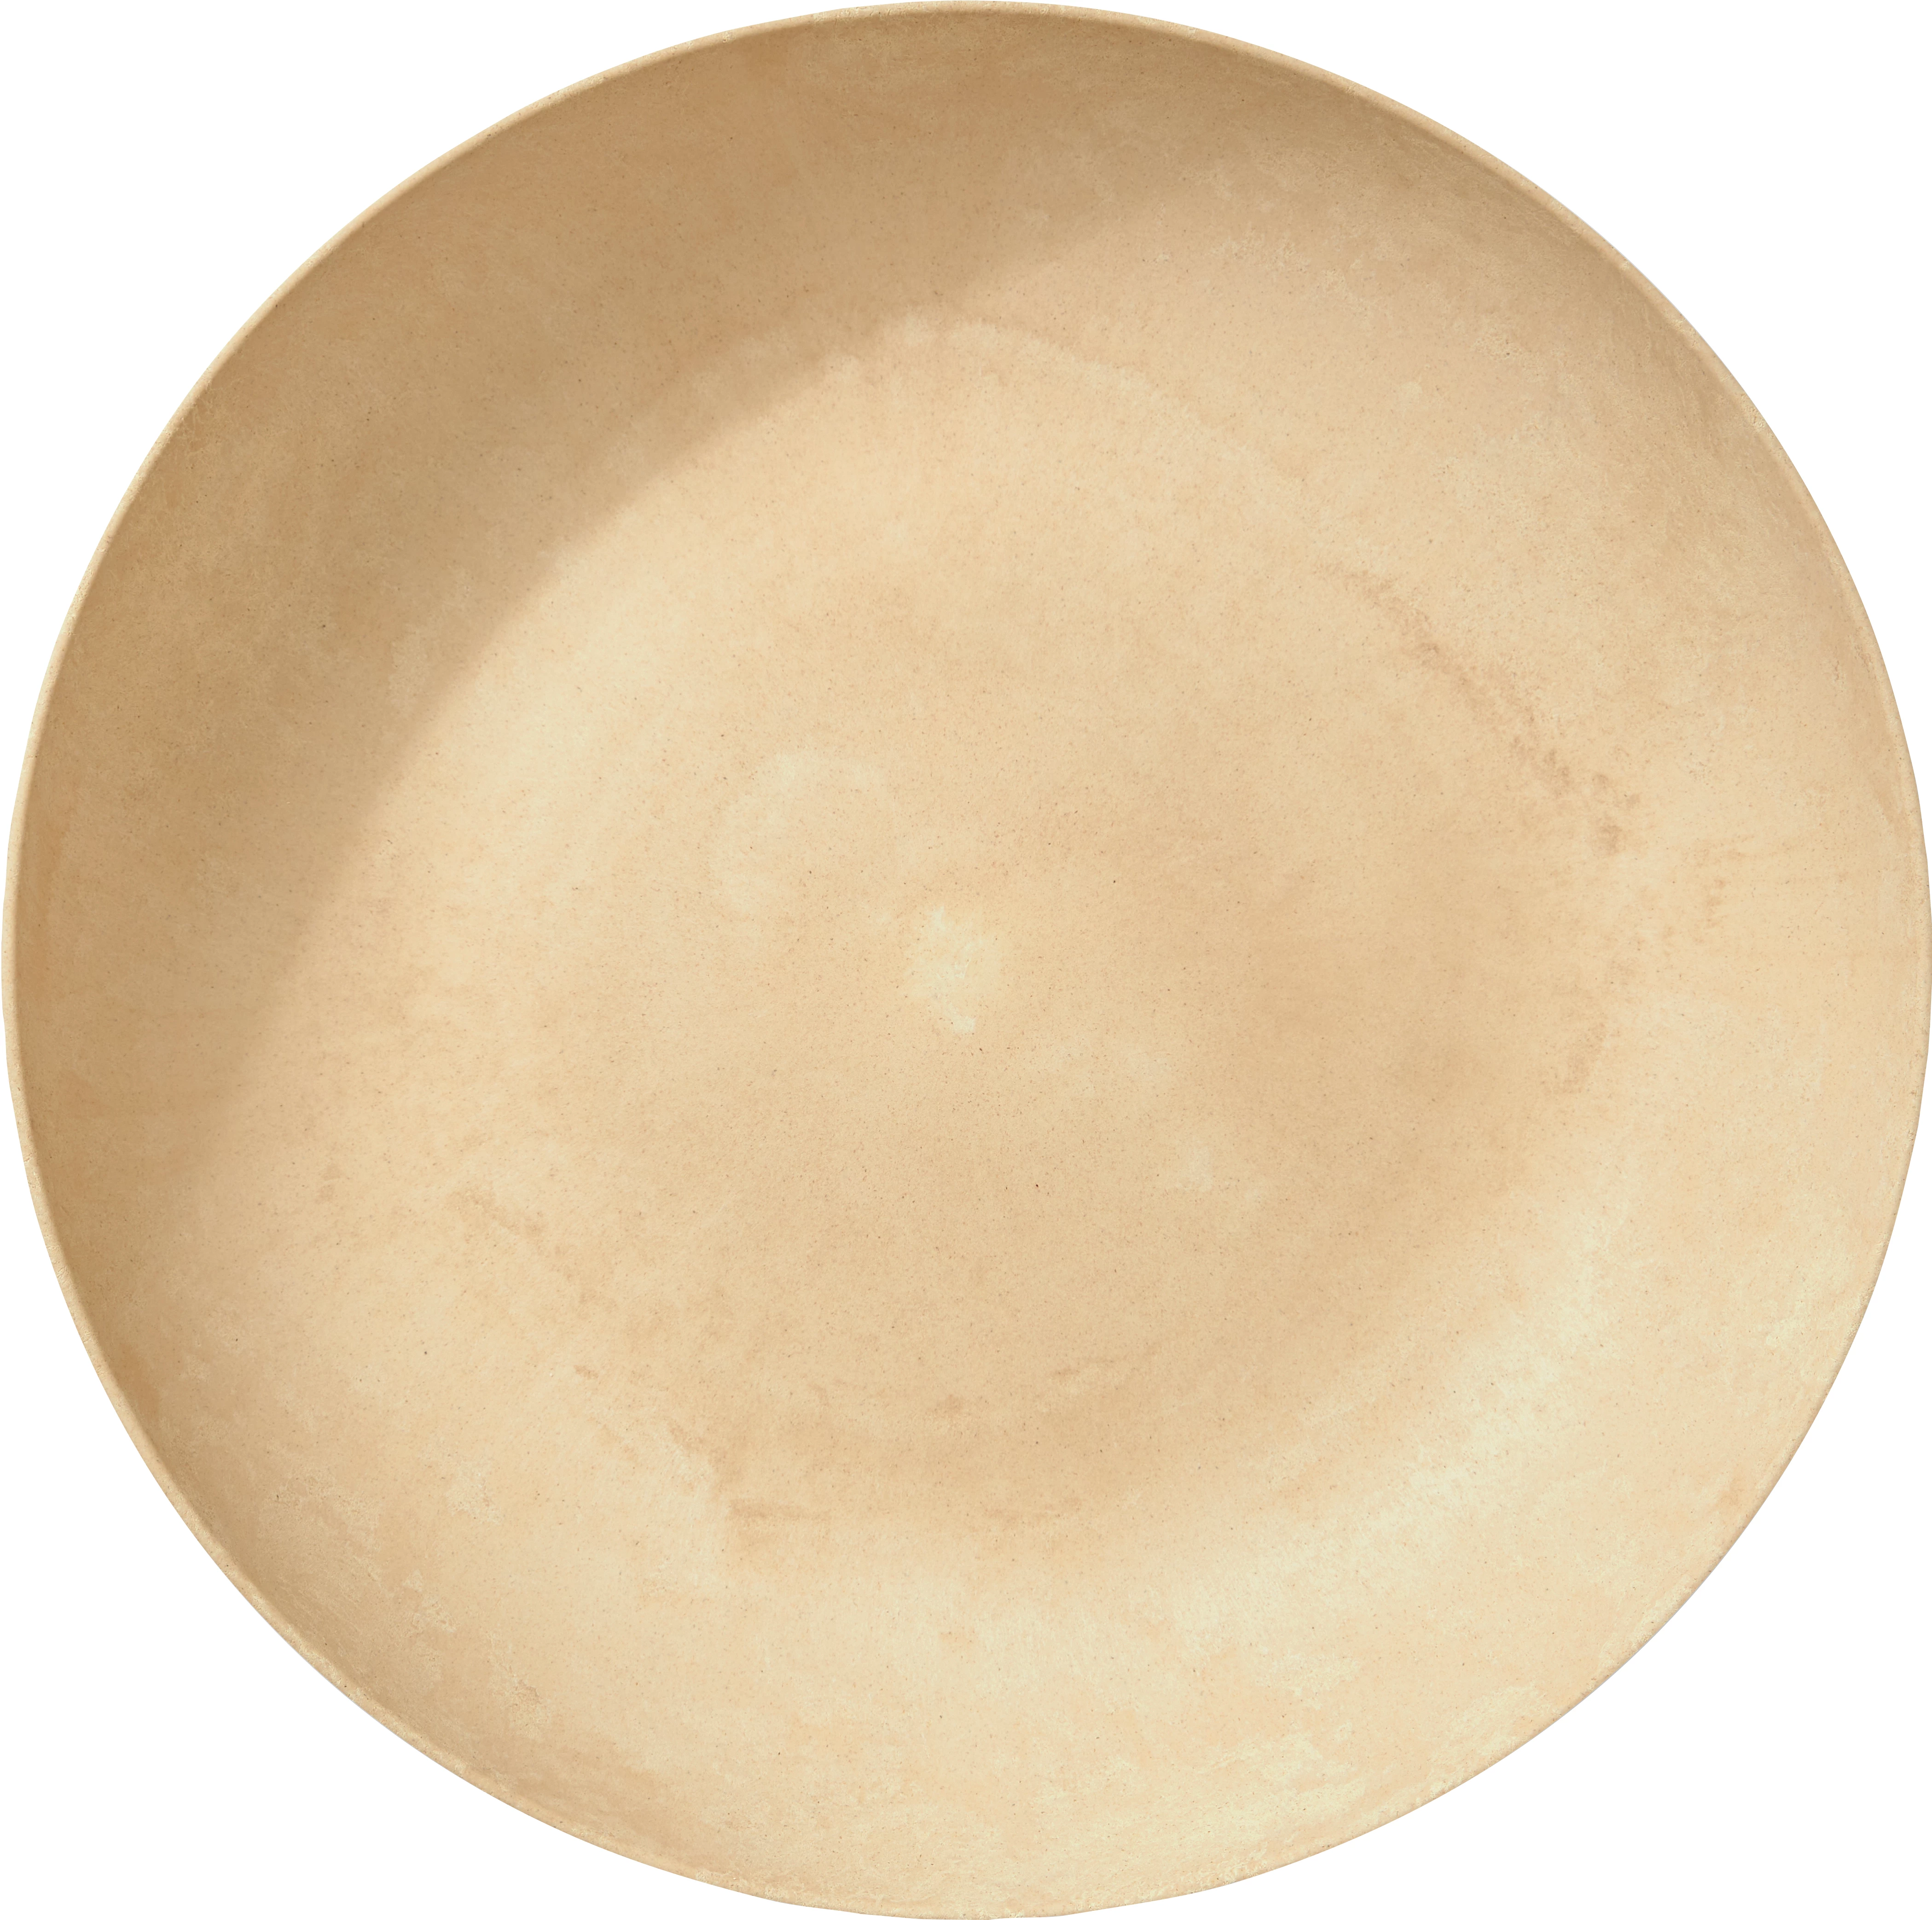 Luups skål, sand, 600 cl, ø39 cm